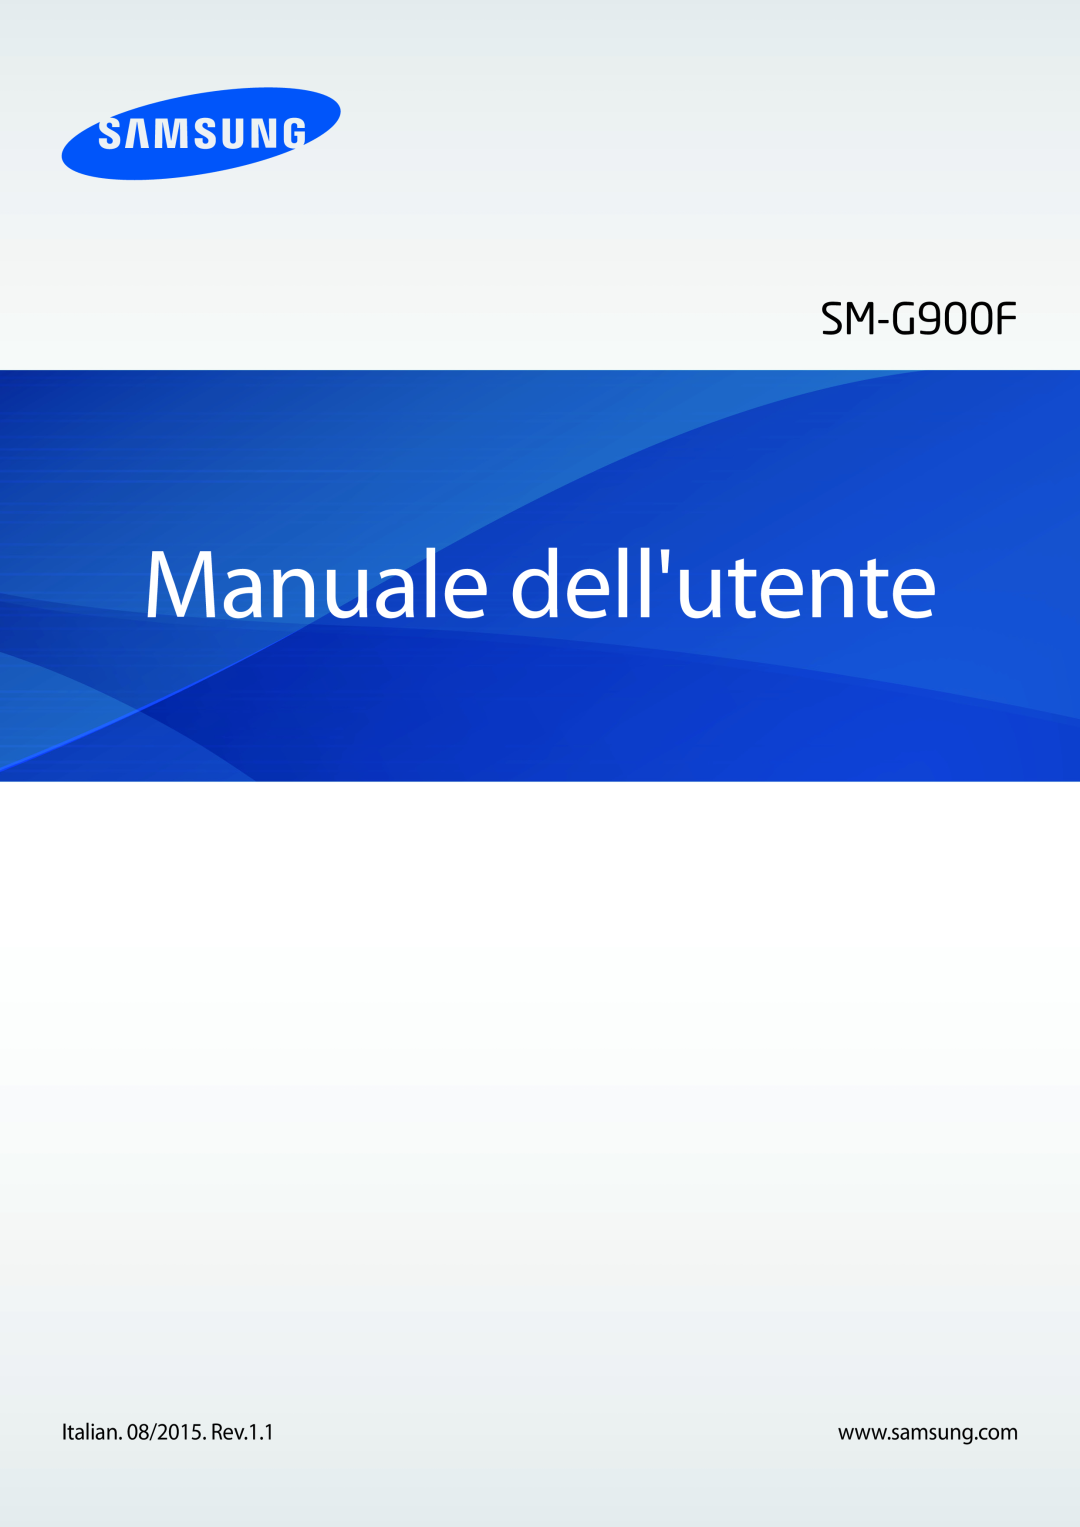 Samsung SM-G900FZWADBT, SM-G900FZKADBT, SM-G900FZDADBT, SM-G900FZKAFTM, SM-G900FZWESWC manual Manuale dellutente 